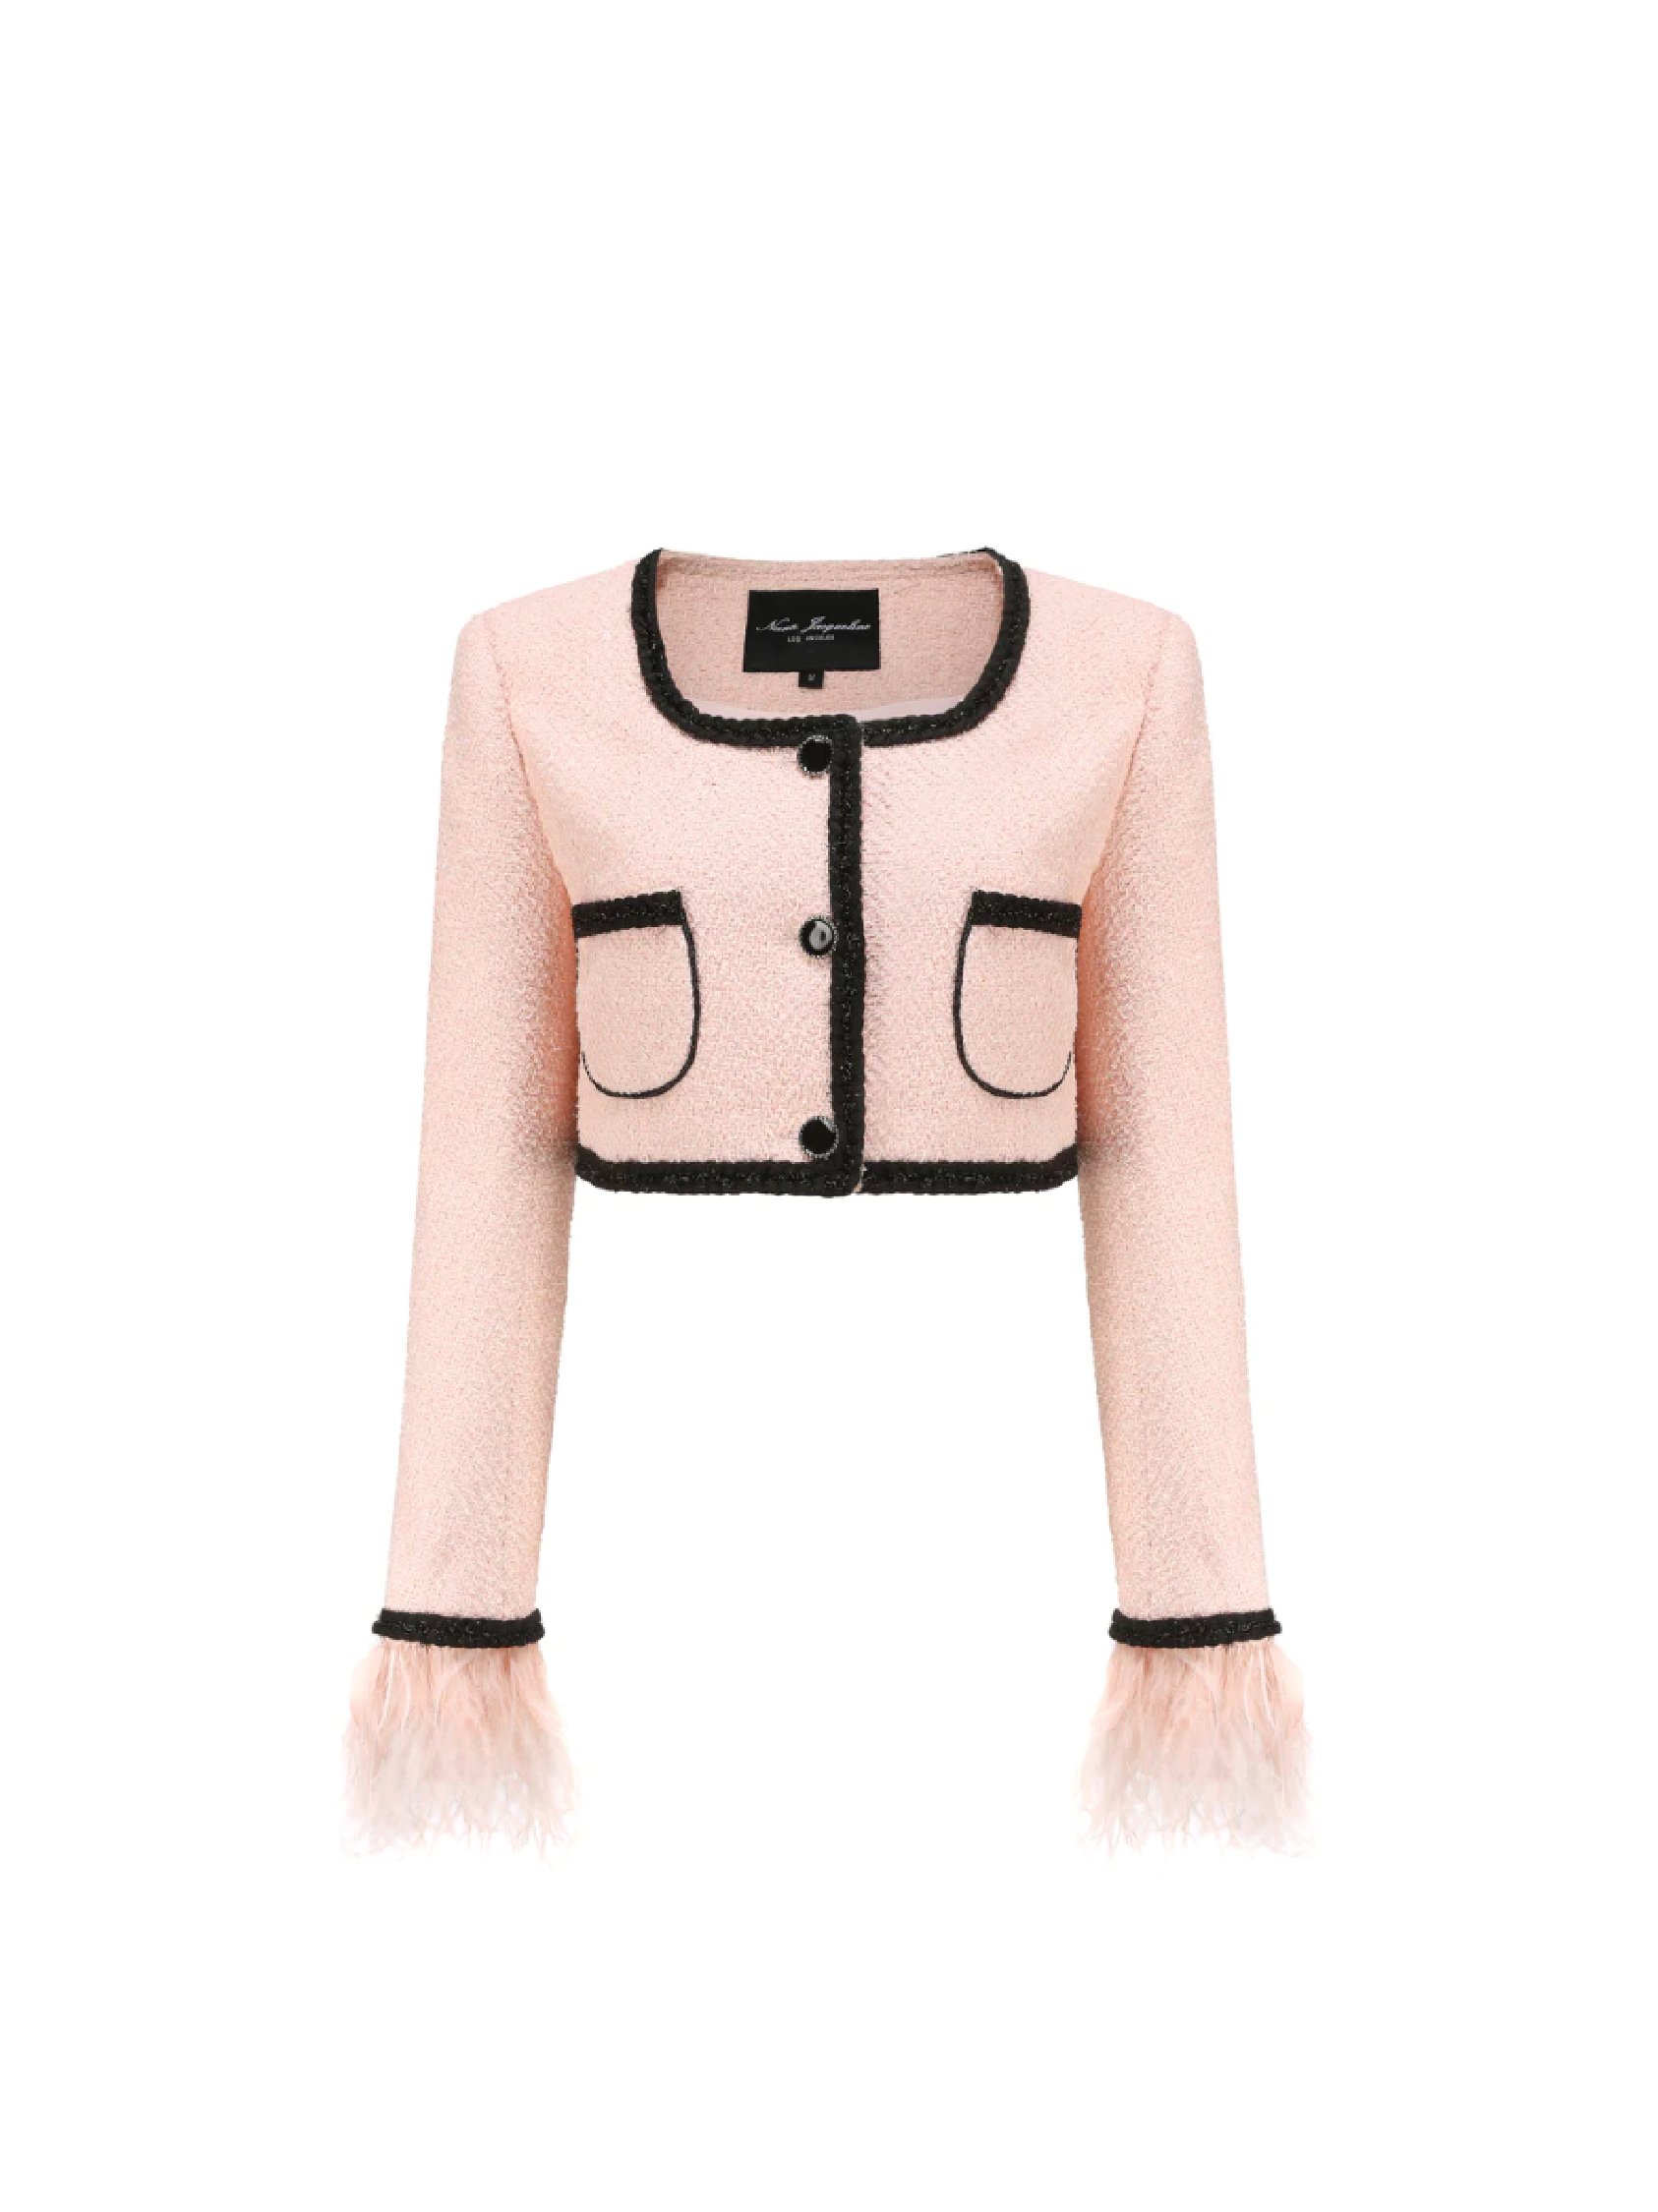 Coco Pink Blazer | Nana Jacqueline Designer Wear